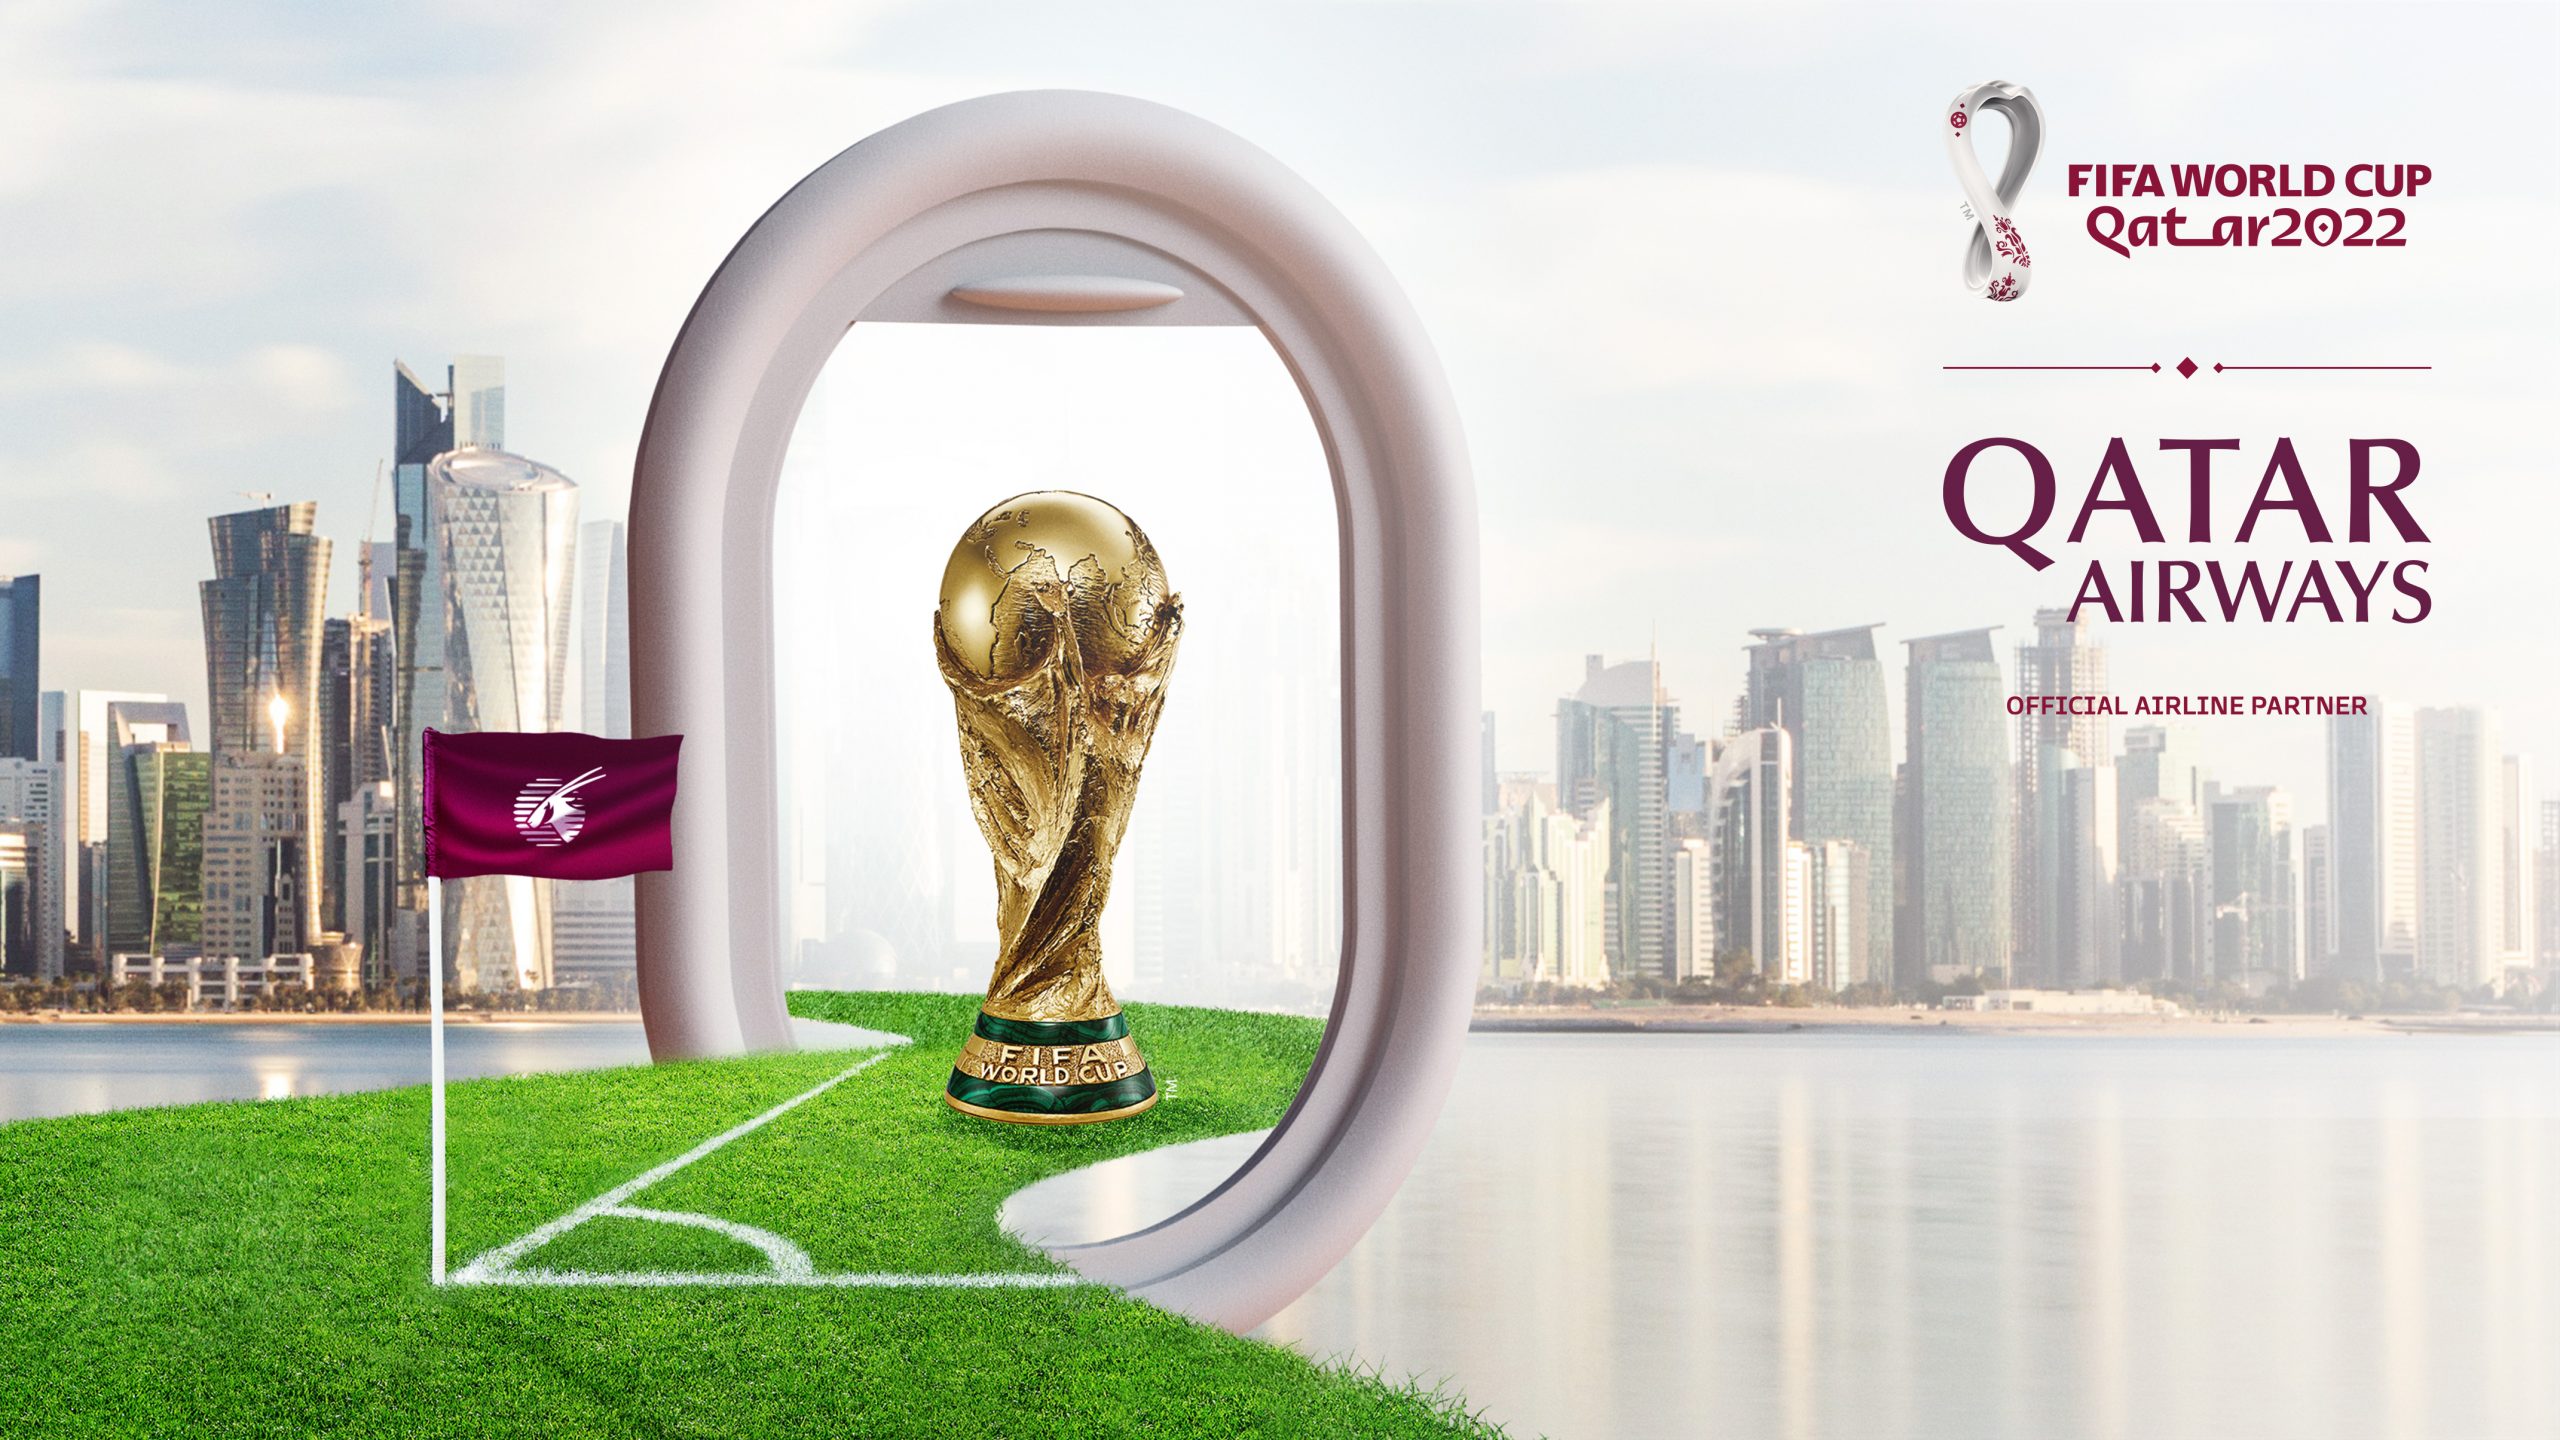 Qatar Airways Holidays launch Qatar 2022 World Cup fan travel packages